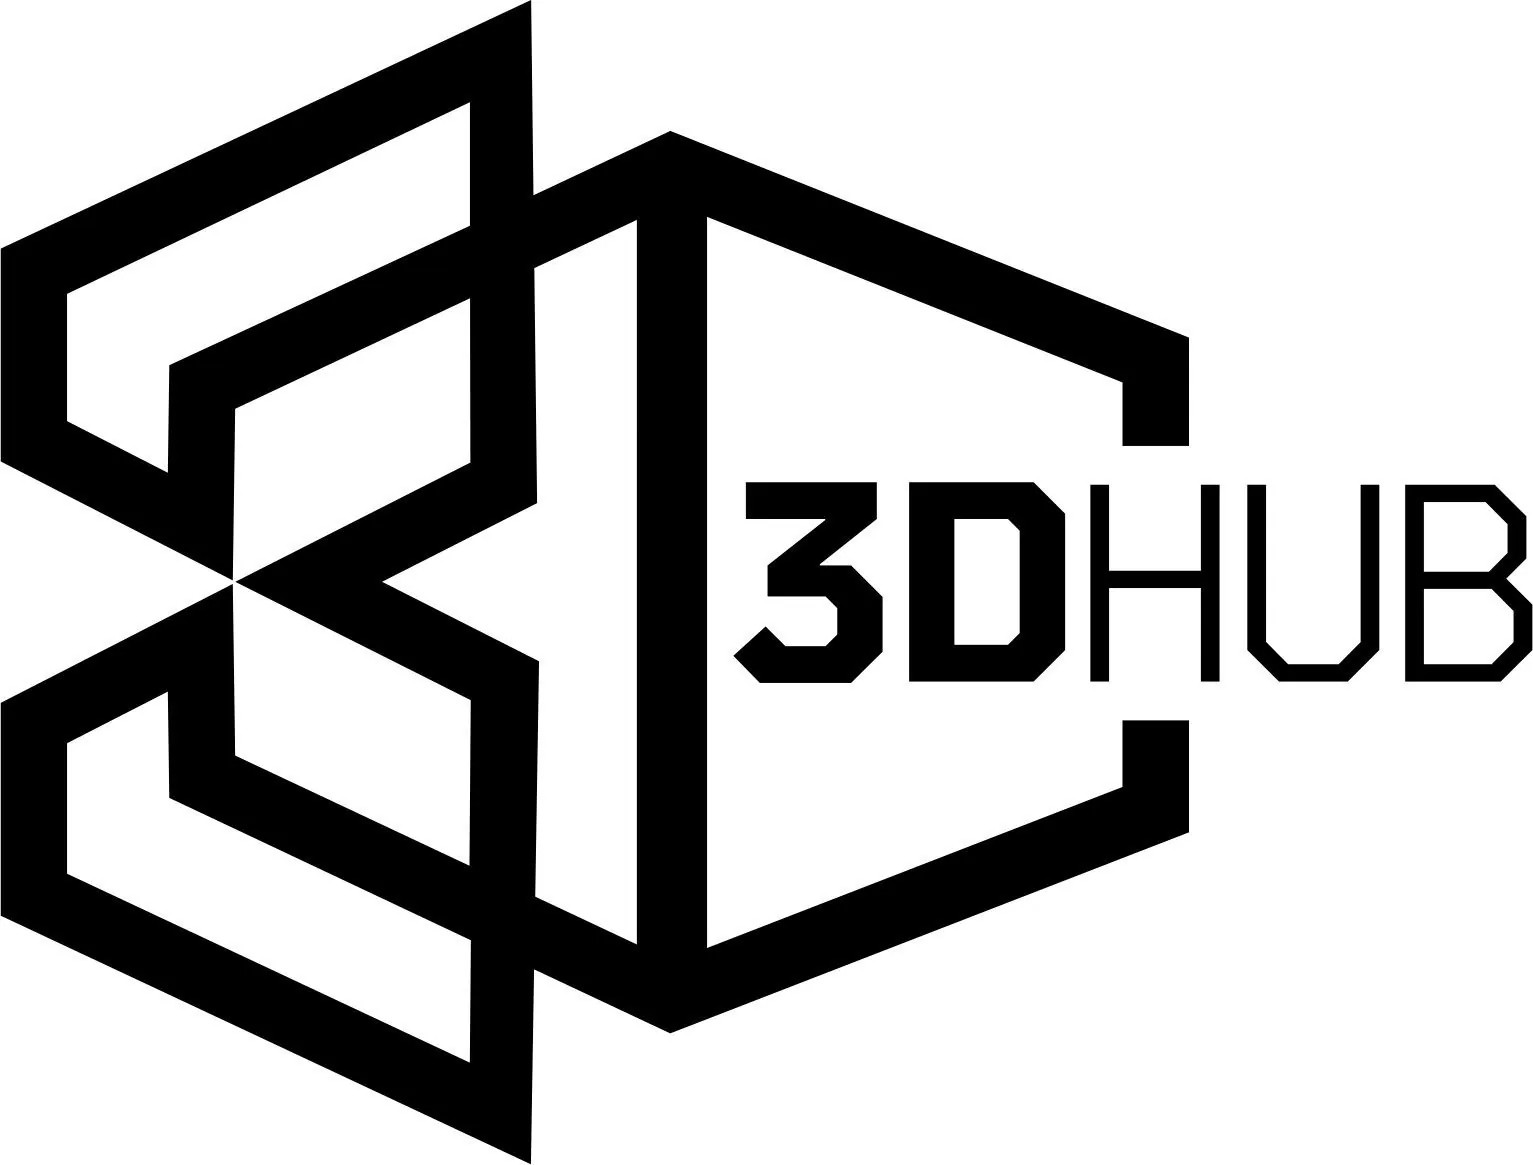 3D Hub logo